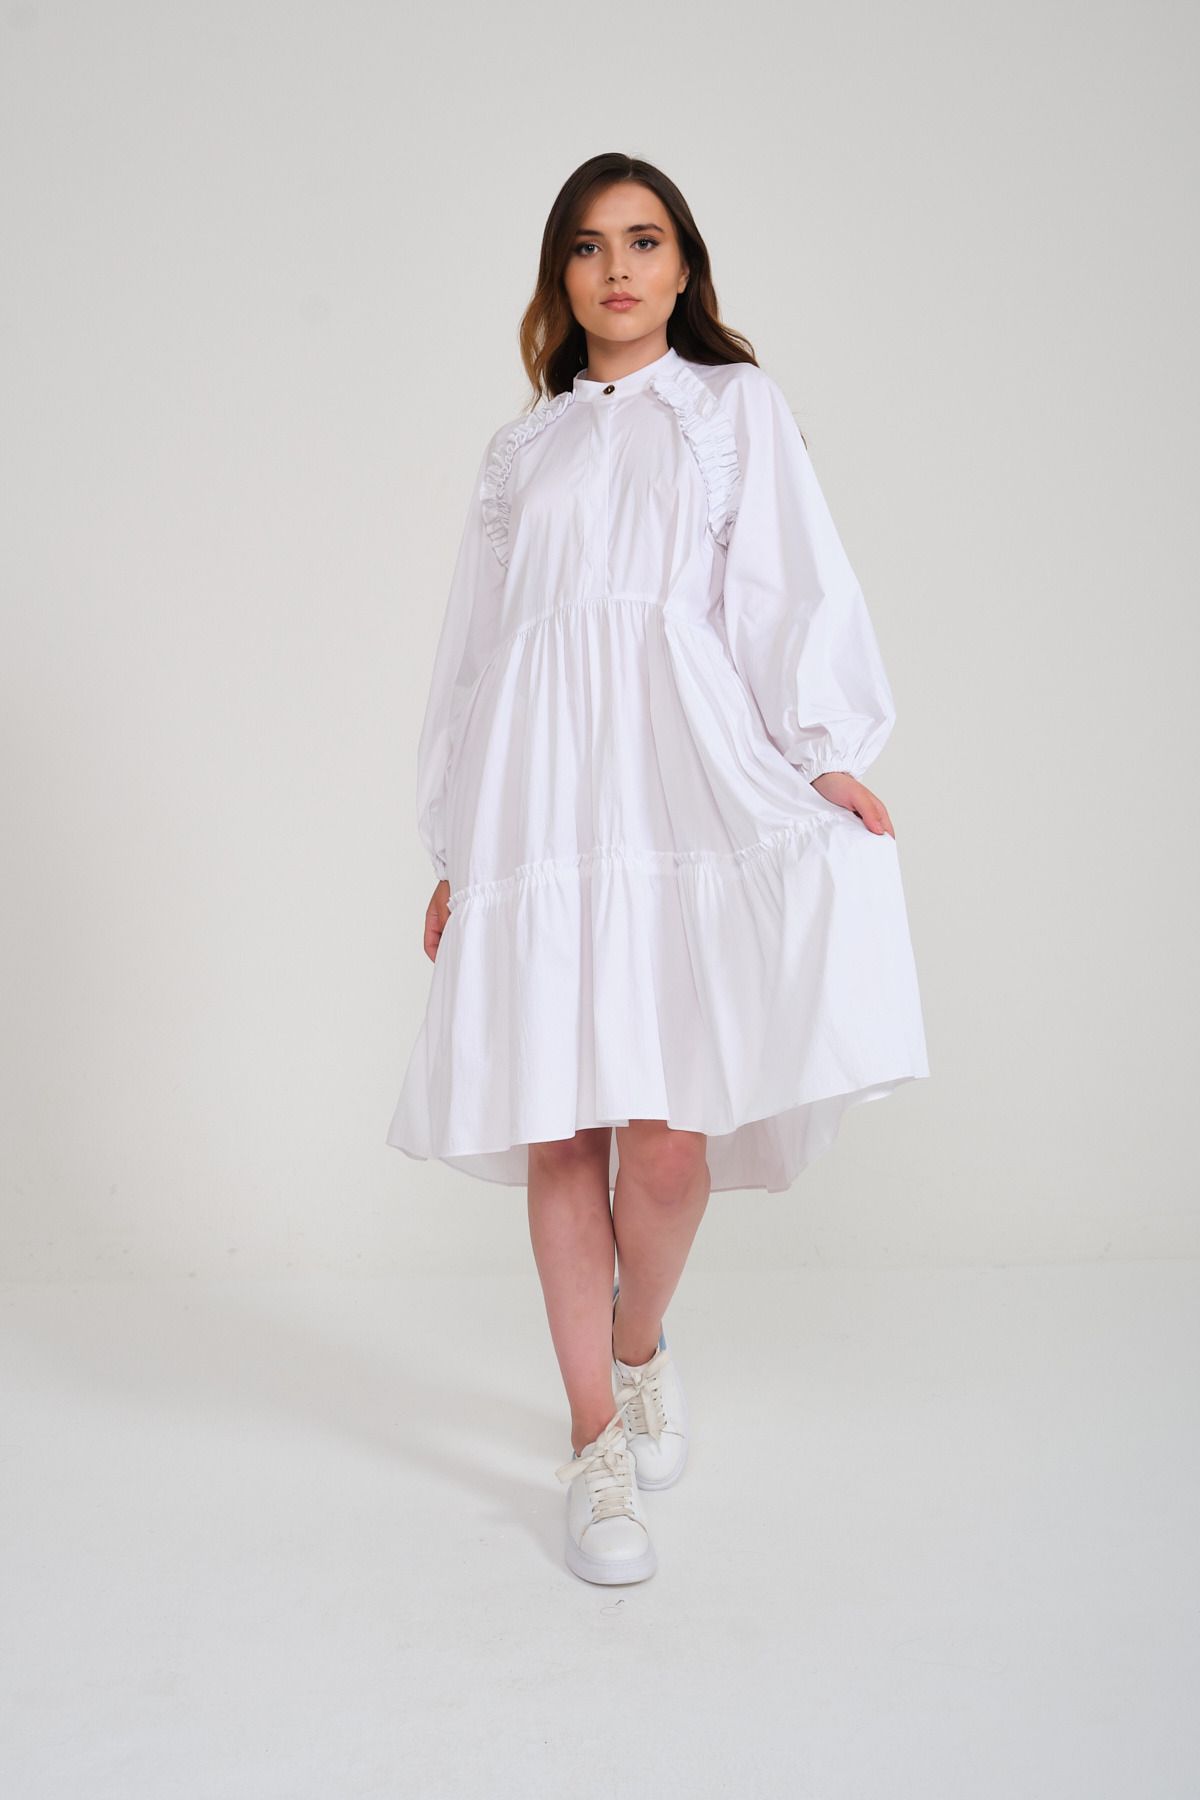 Mimya Beyaz Fırfırlı Rahat Kısa Pamuklu Elbise 3300